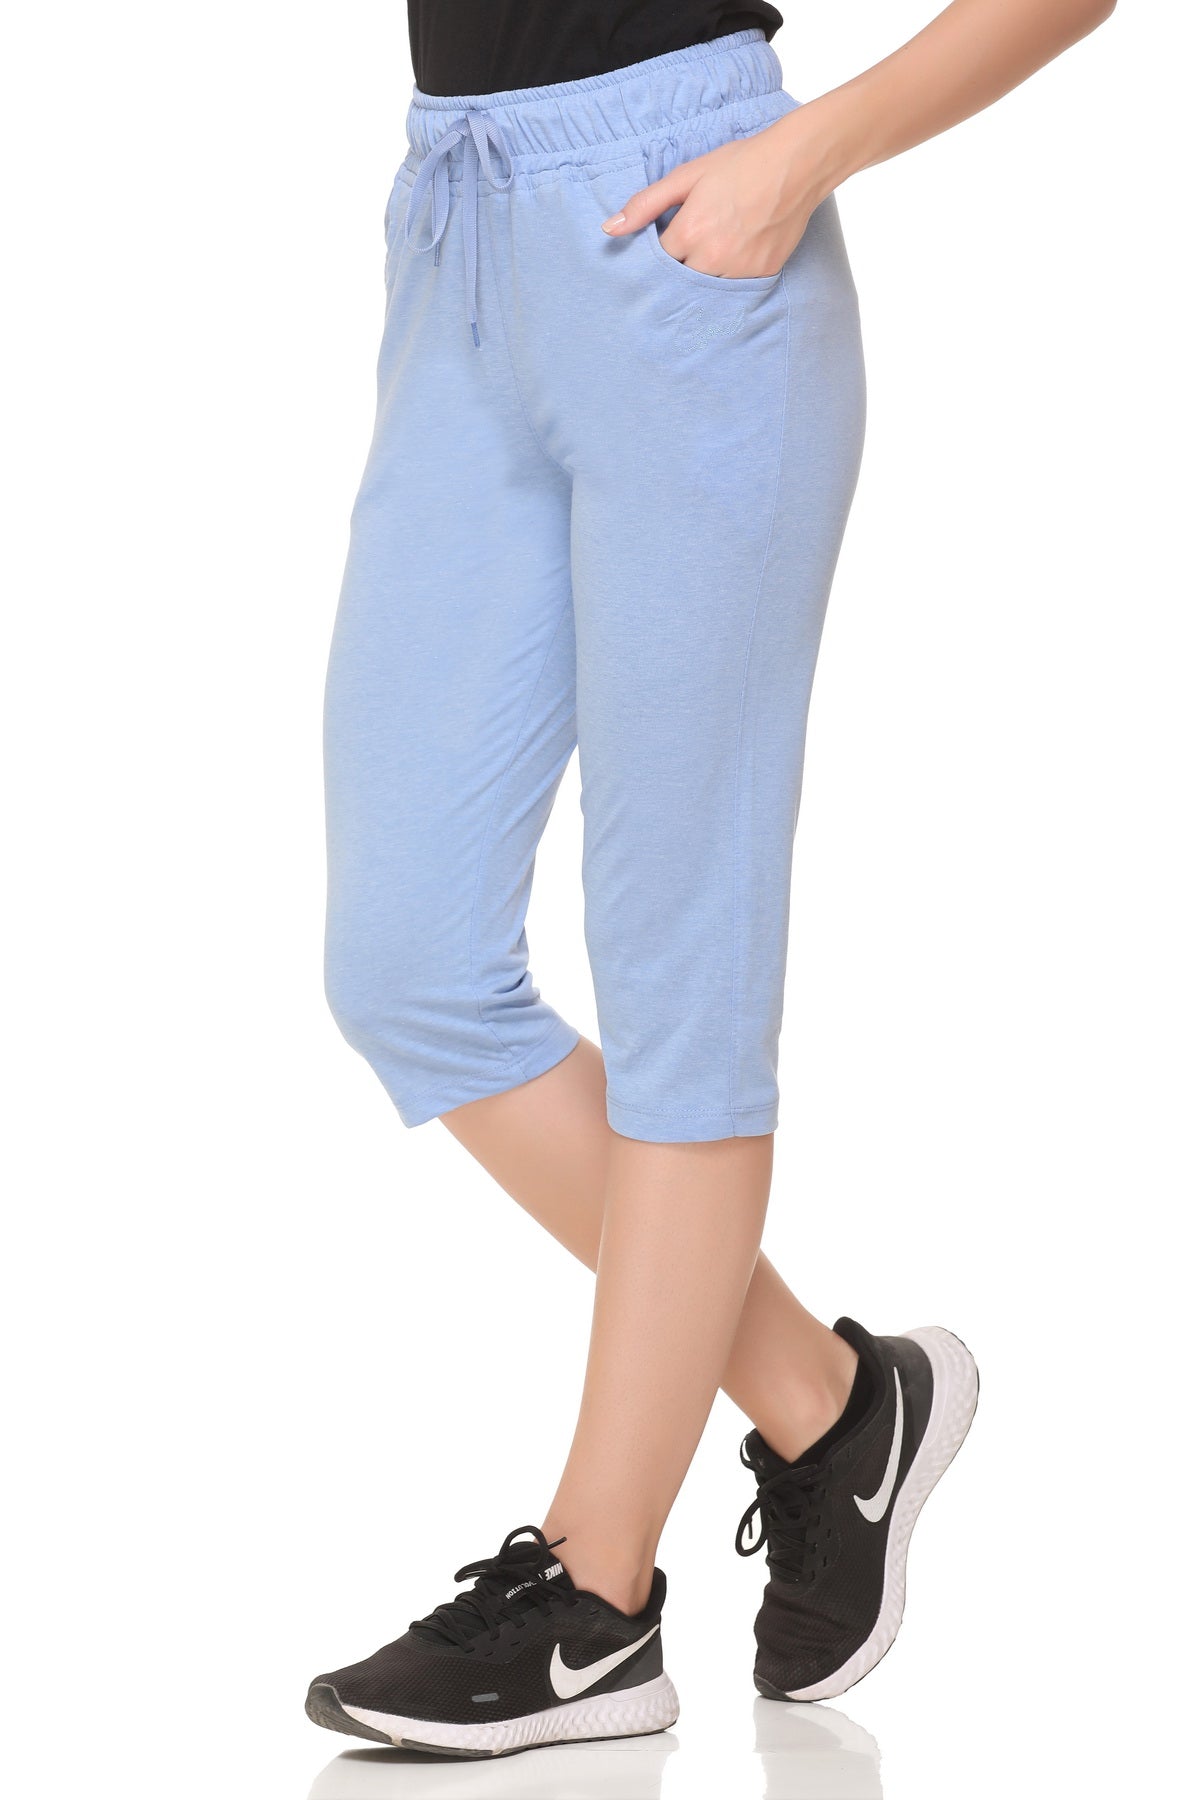 Cotton Capris For Women Regular Fit Half Pants Pack of 2 (Sky Blue